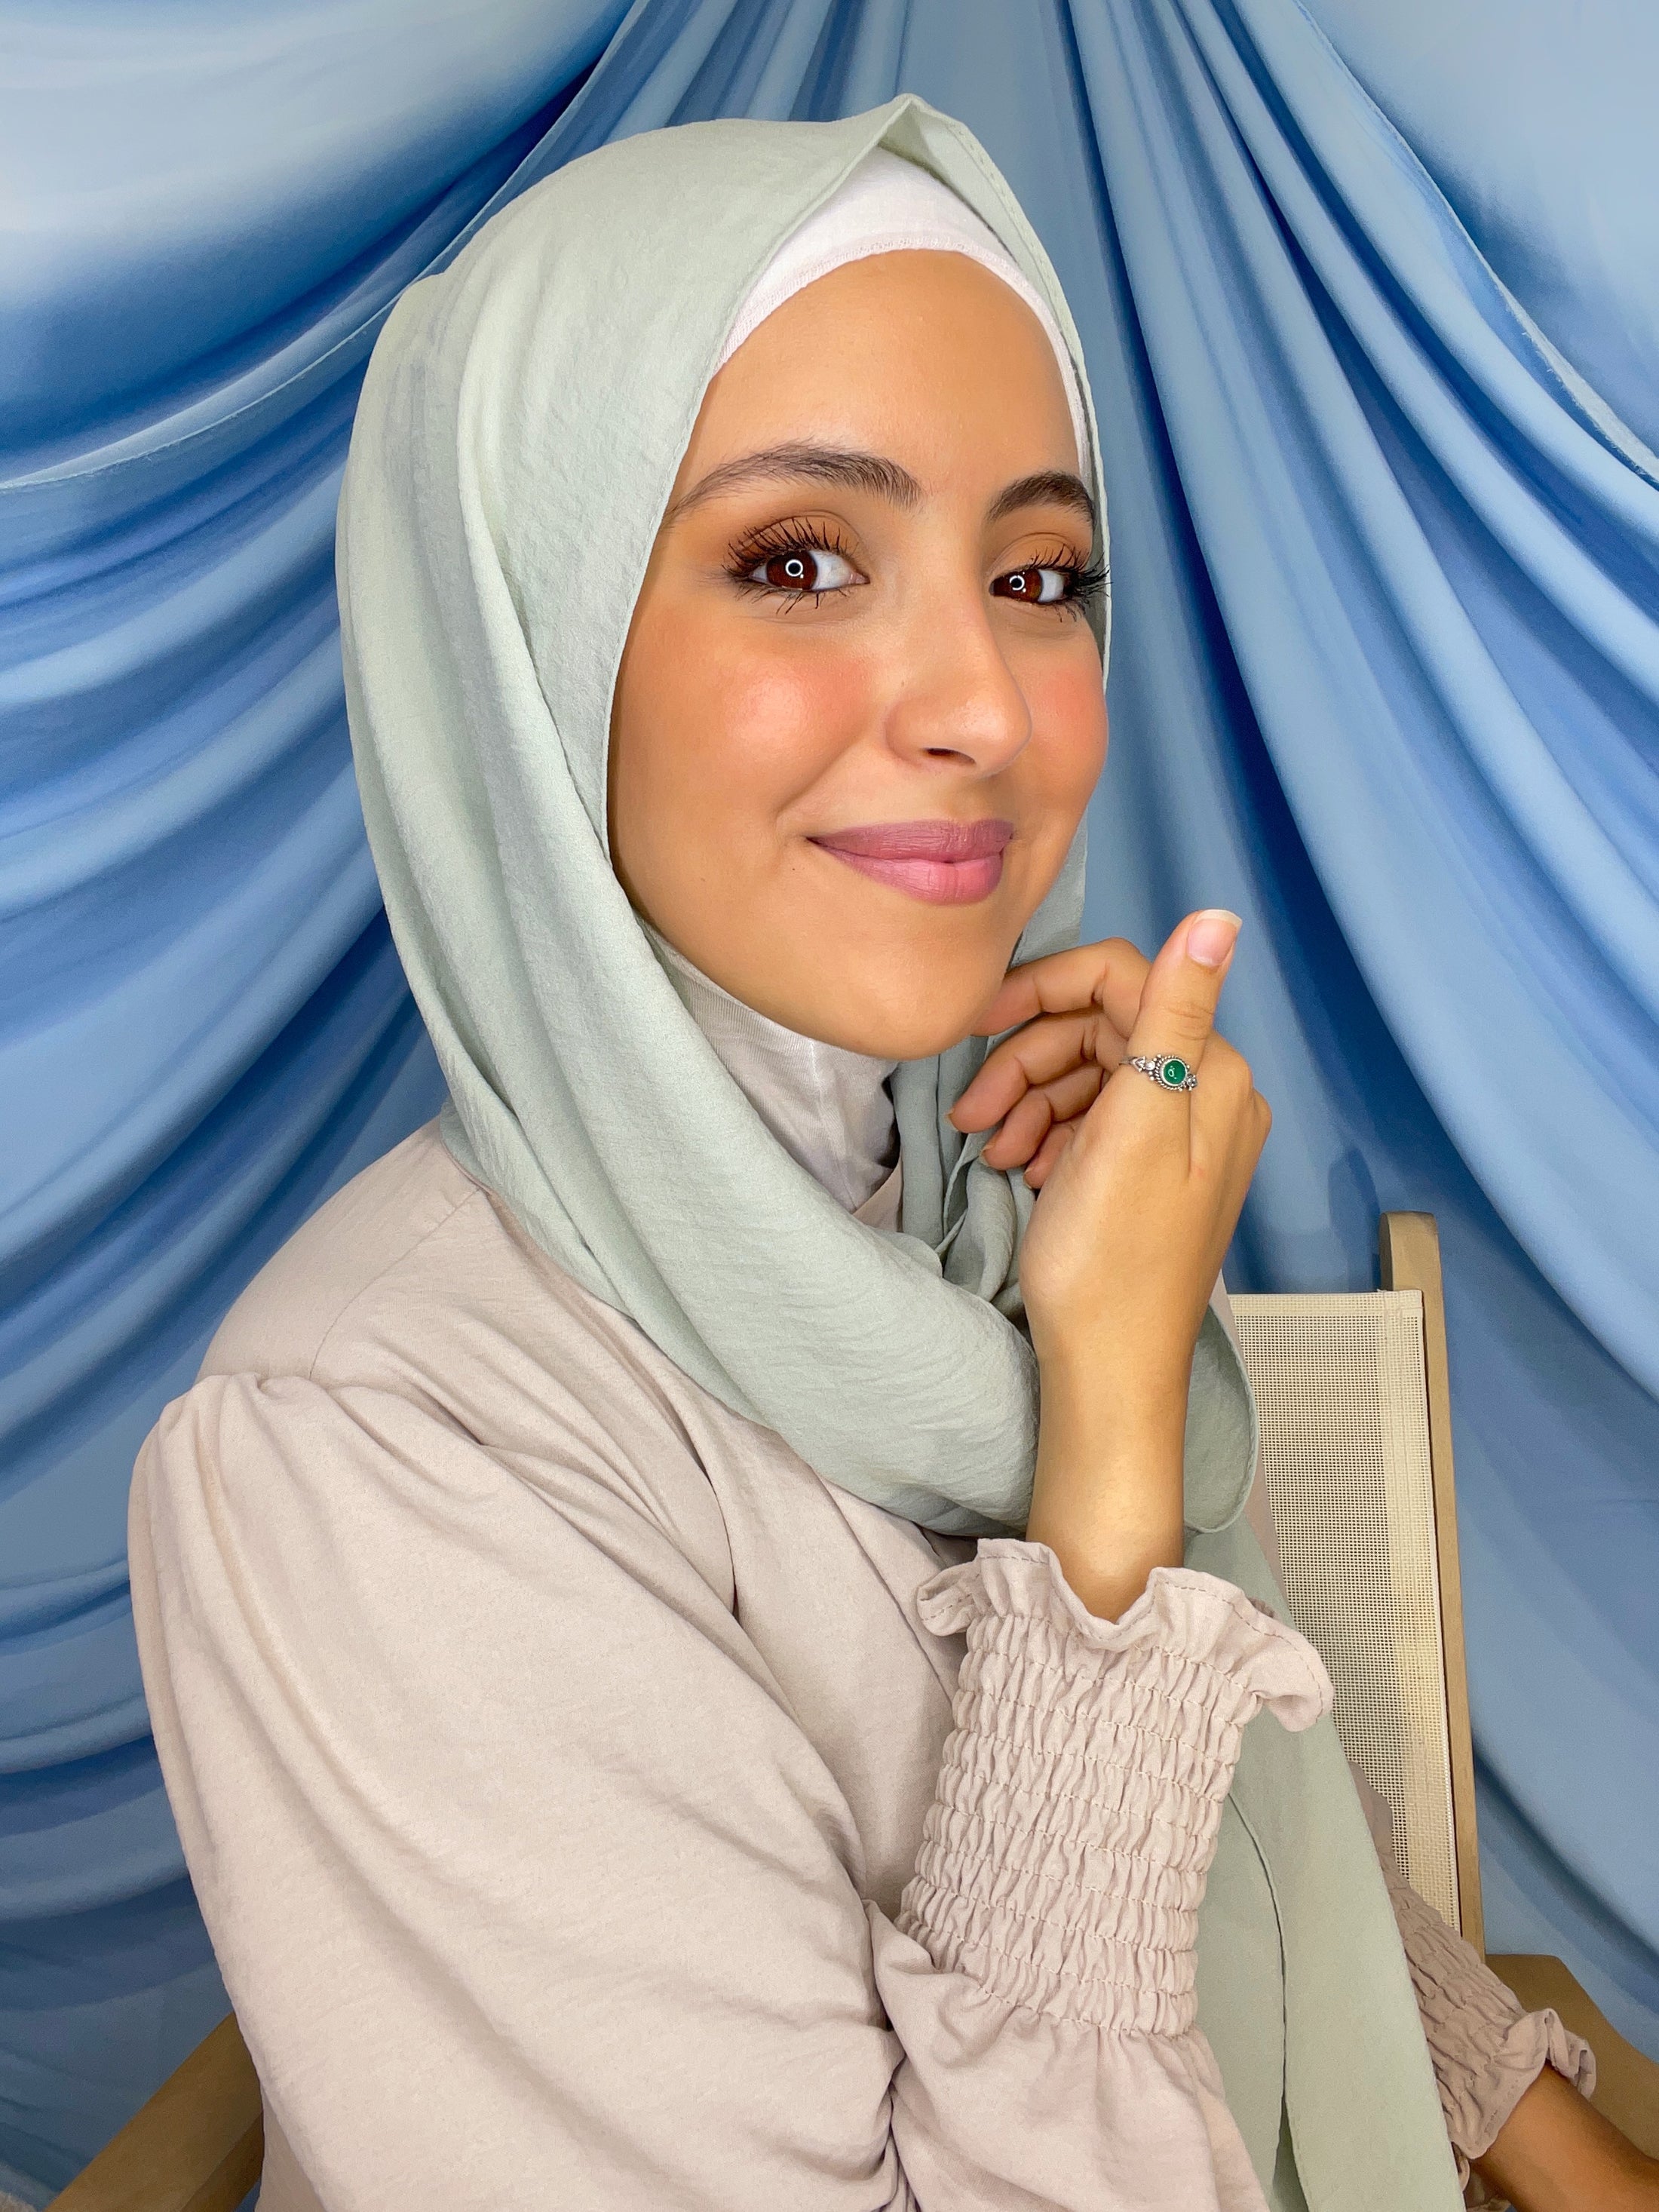 Hijab crinckle crepe verde pistacchio pastello